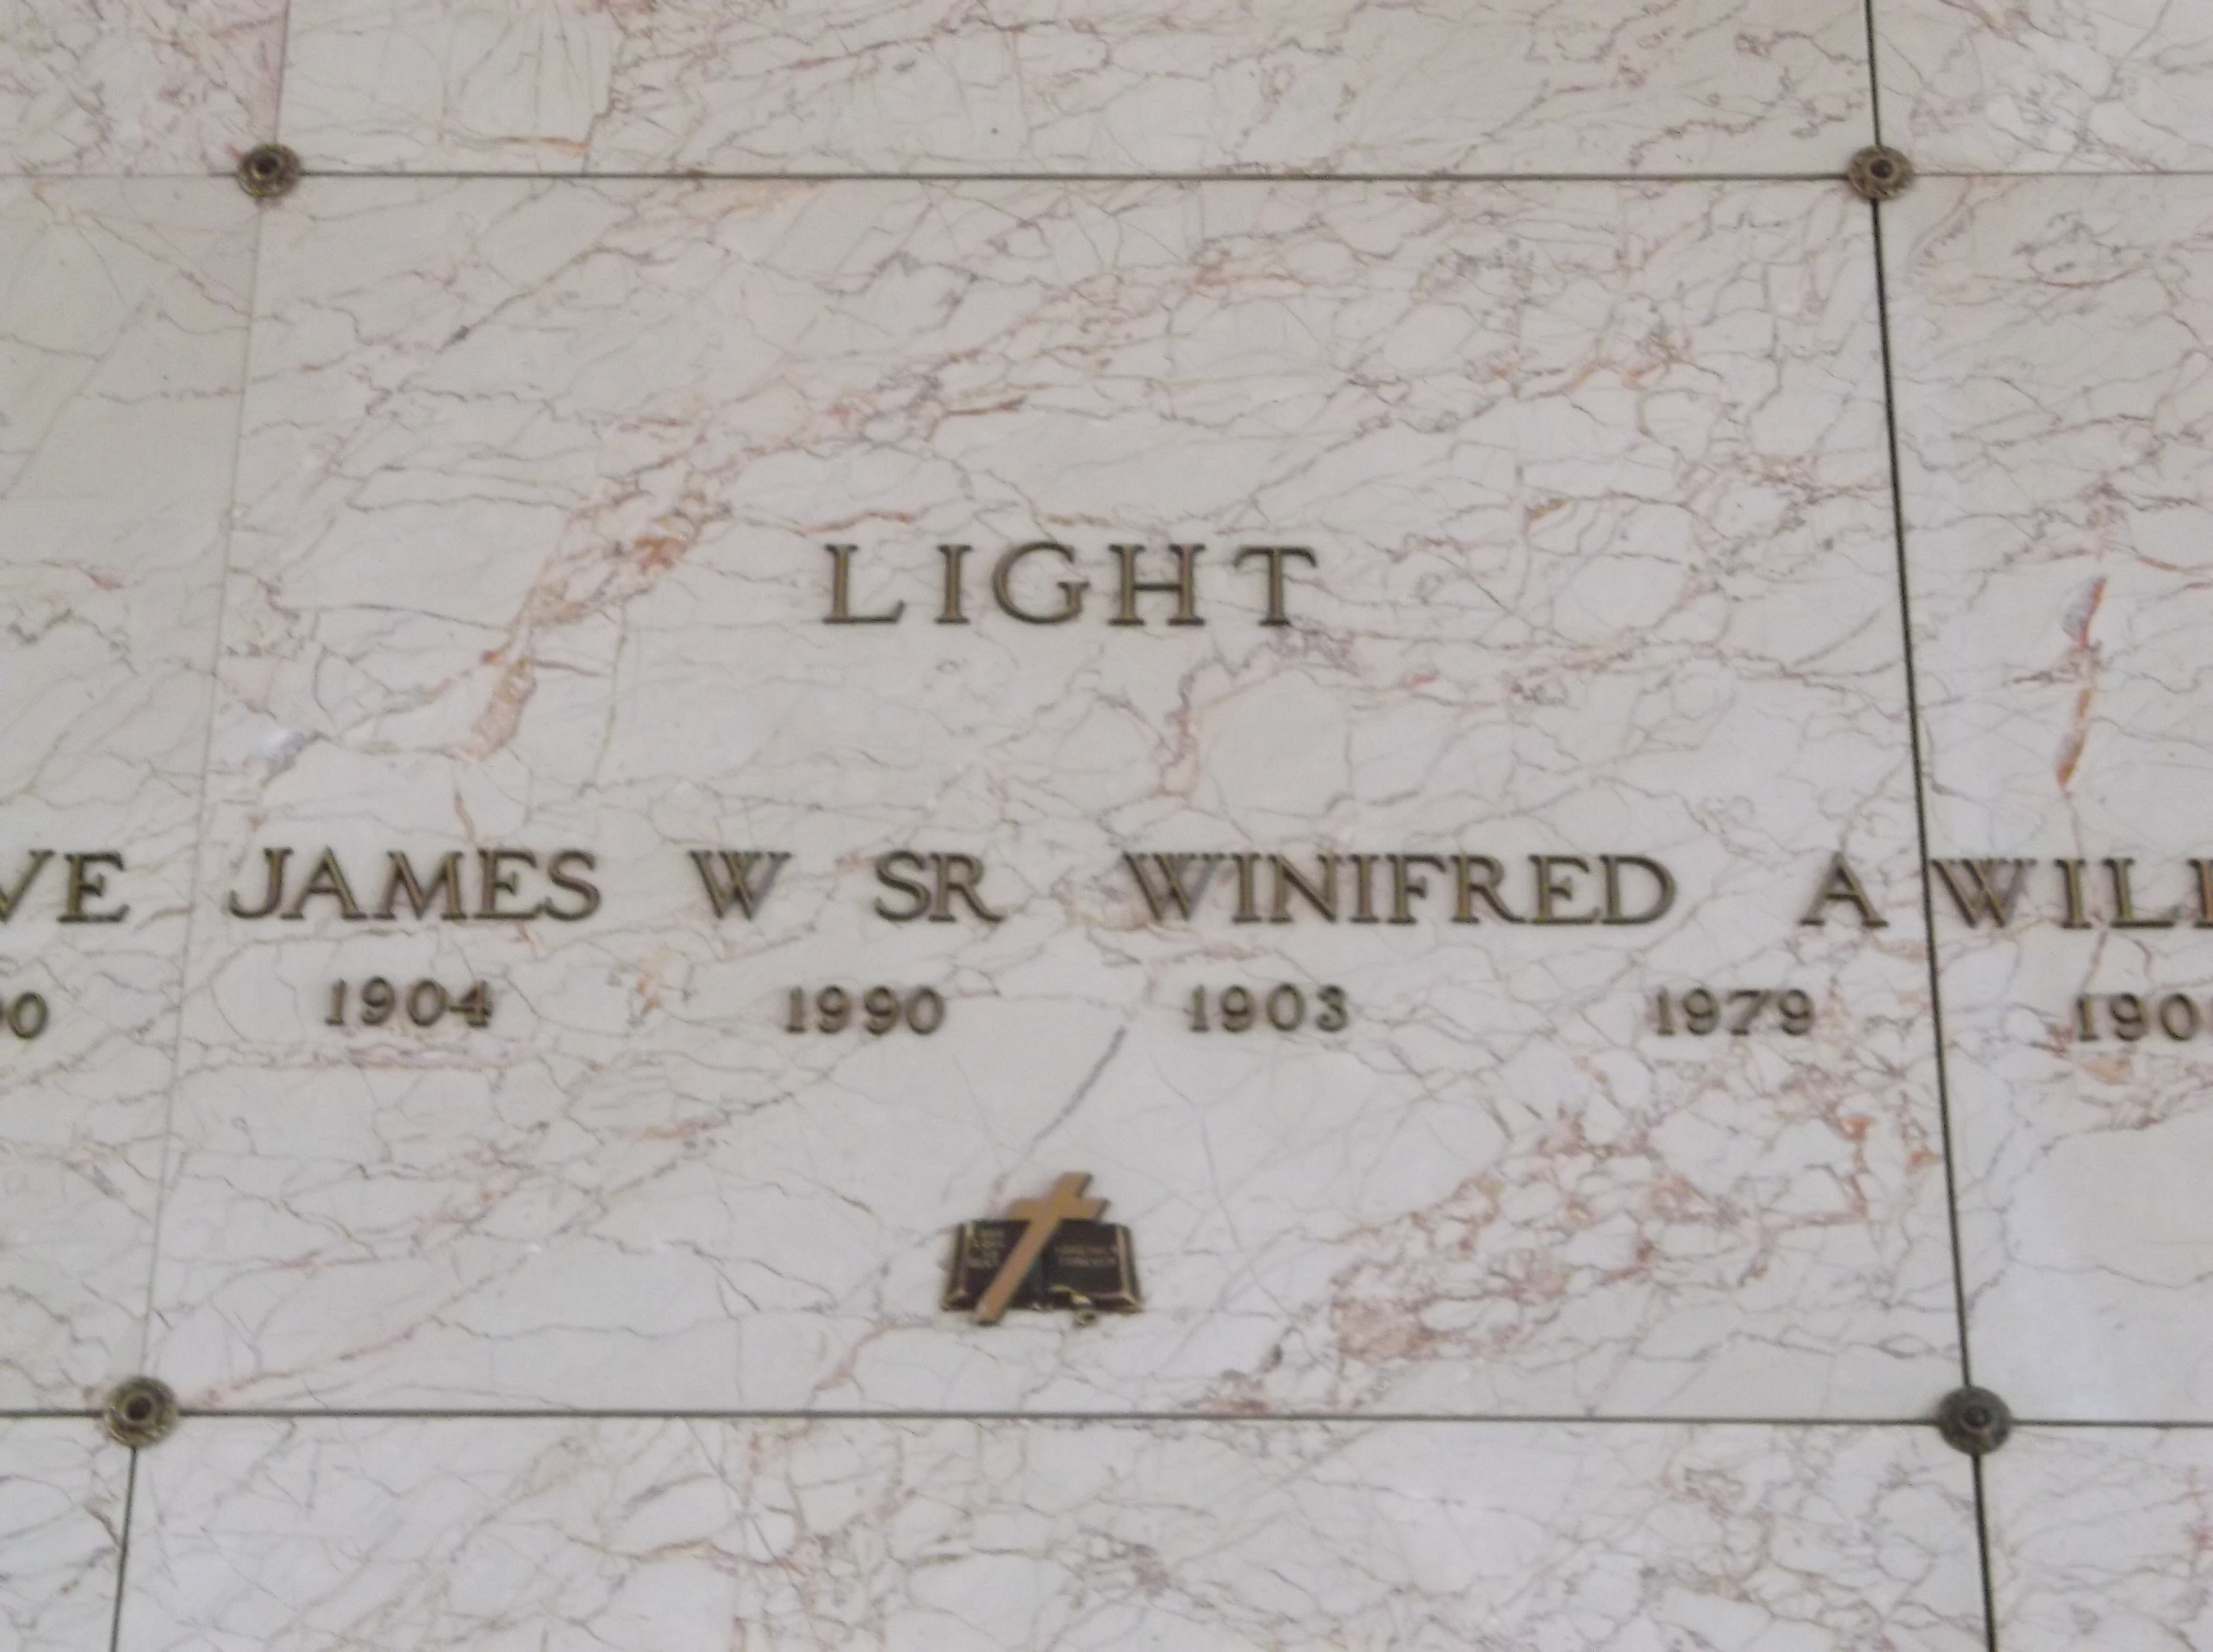 Winifred A Light